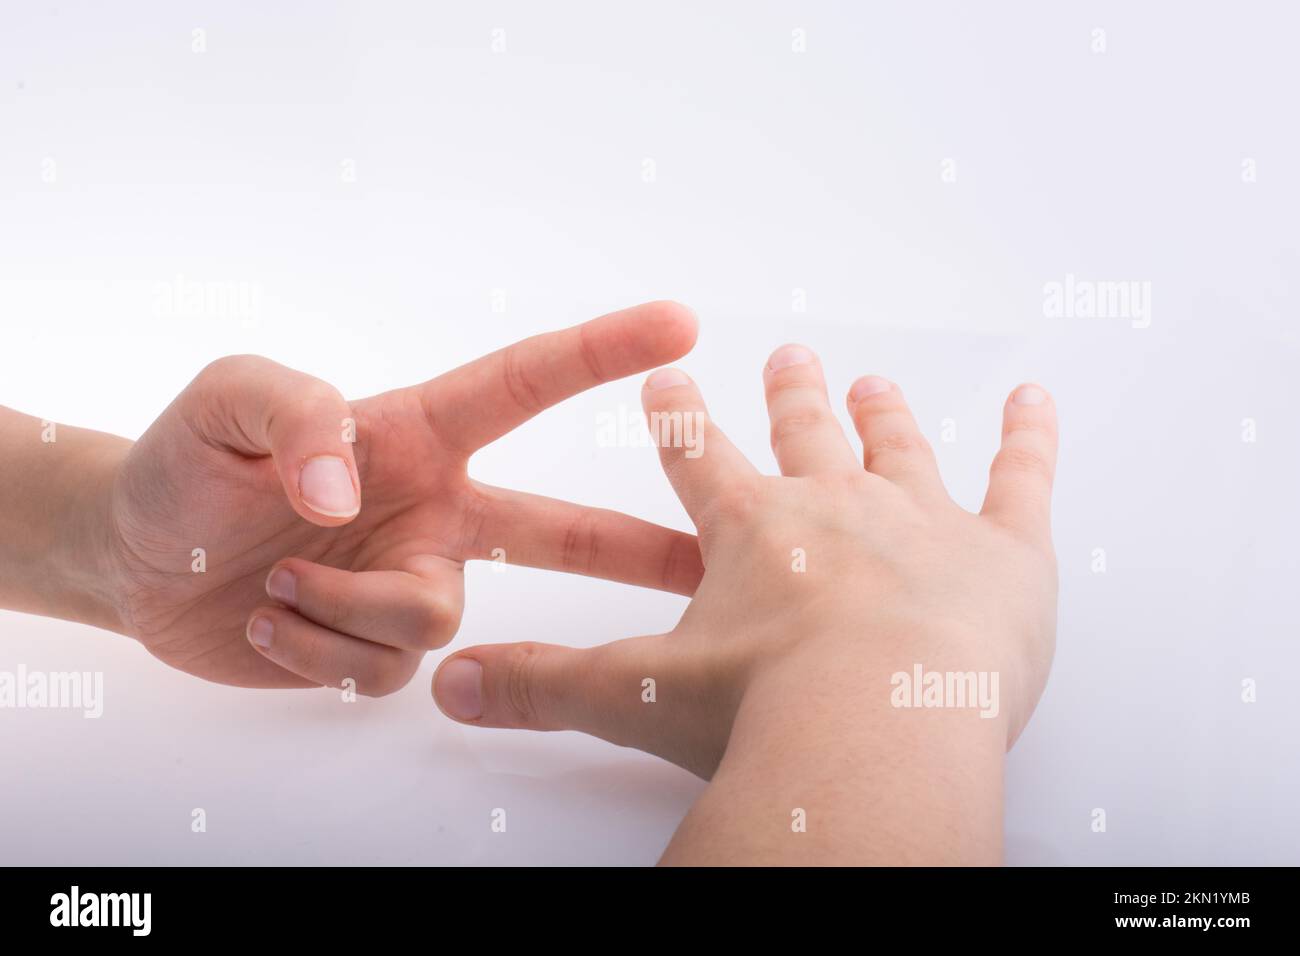 Hands showing the symbols rock paper scissors Stock Photo